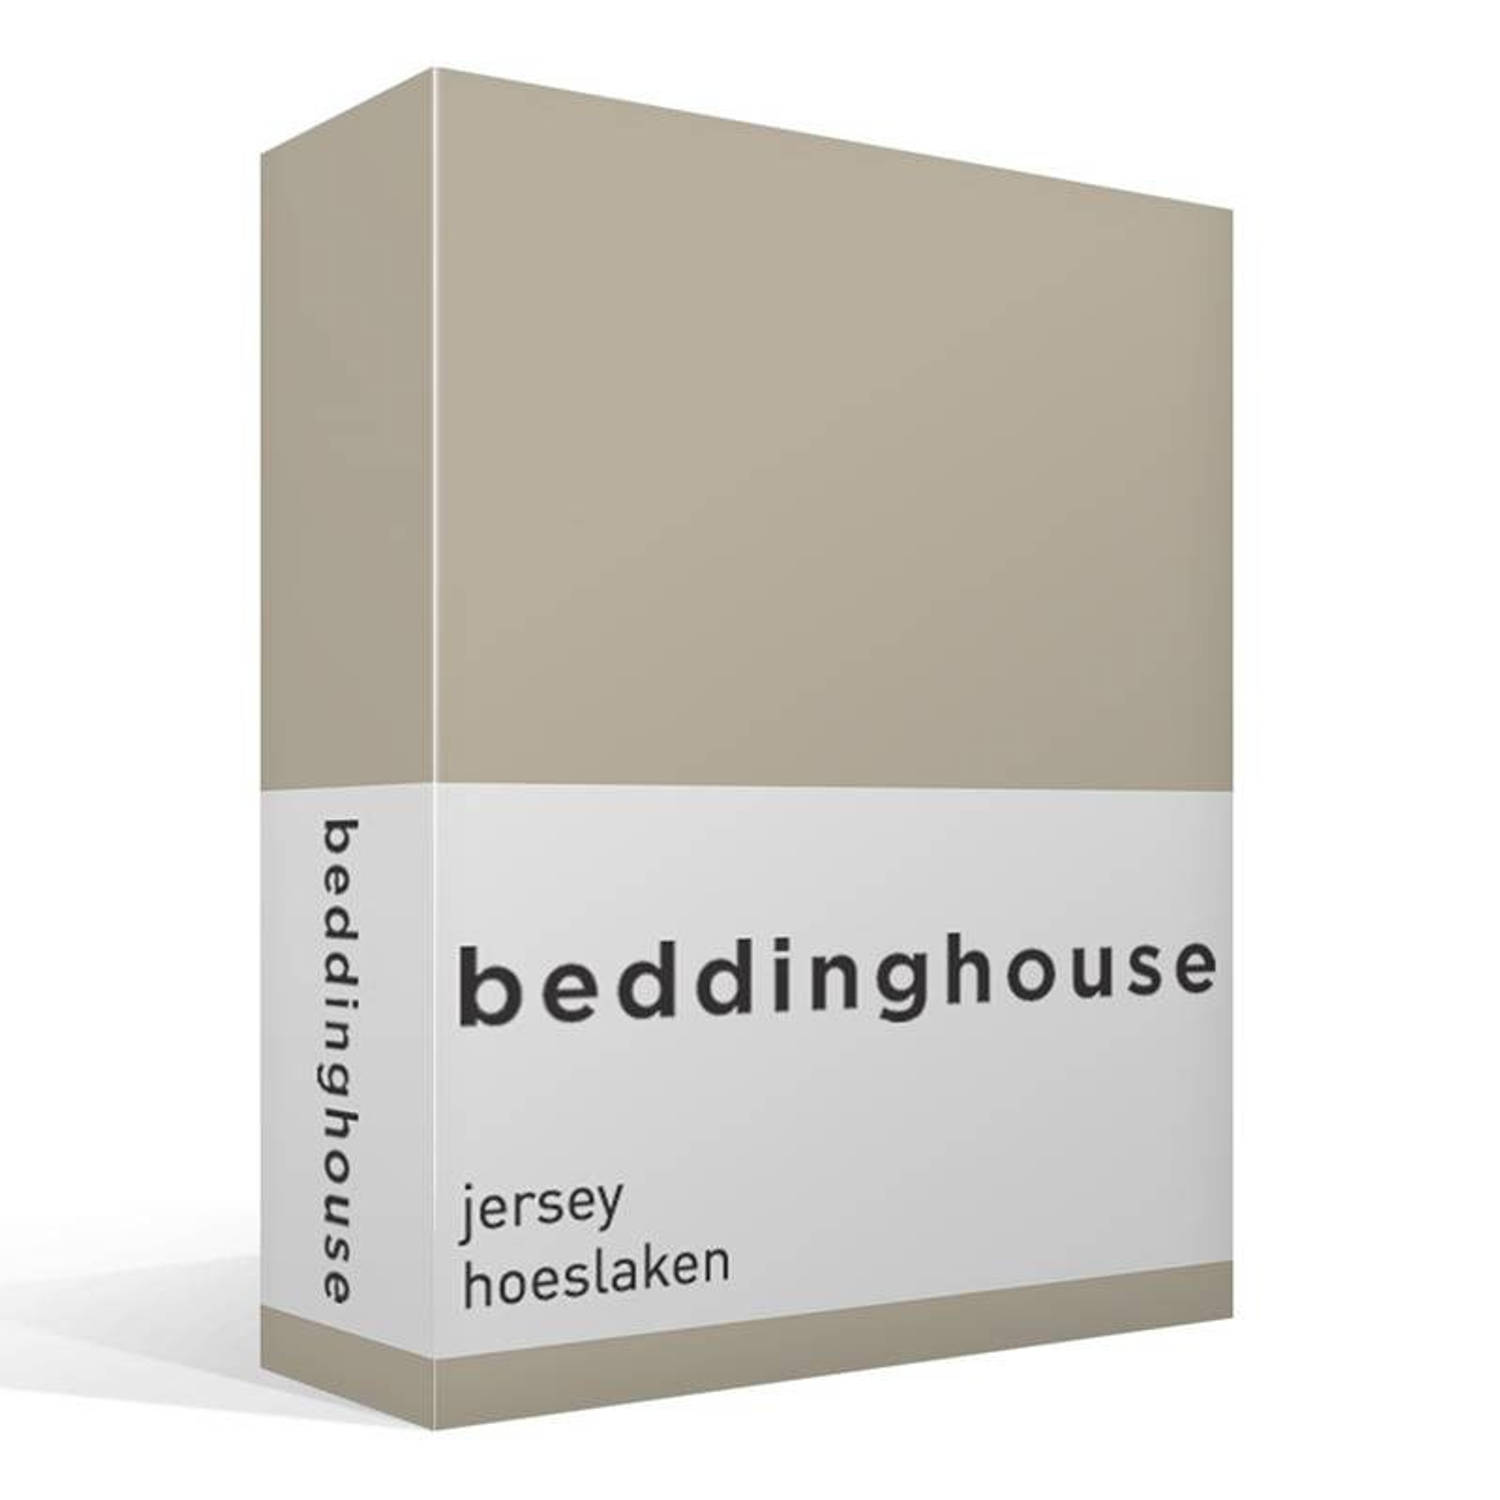 Beddinghouse jersey hoeslaken